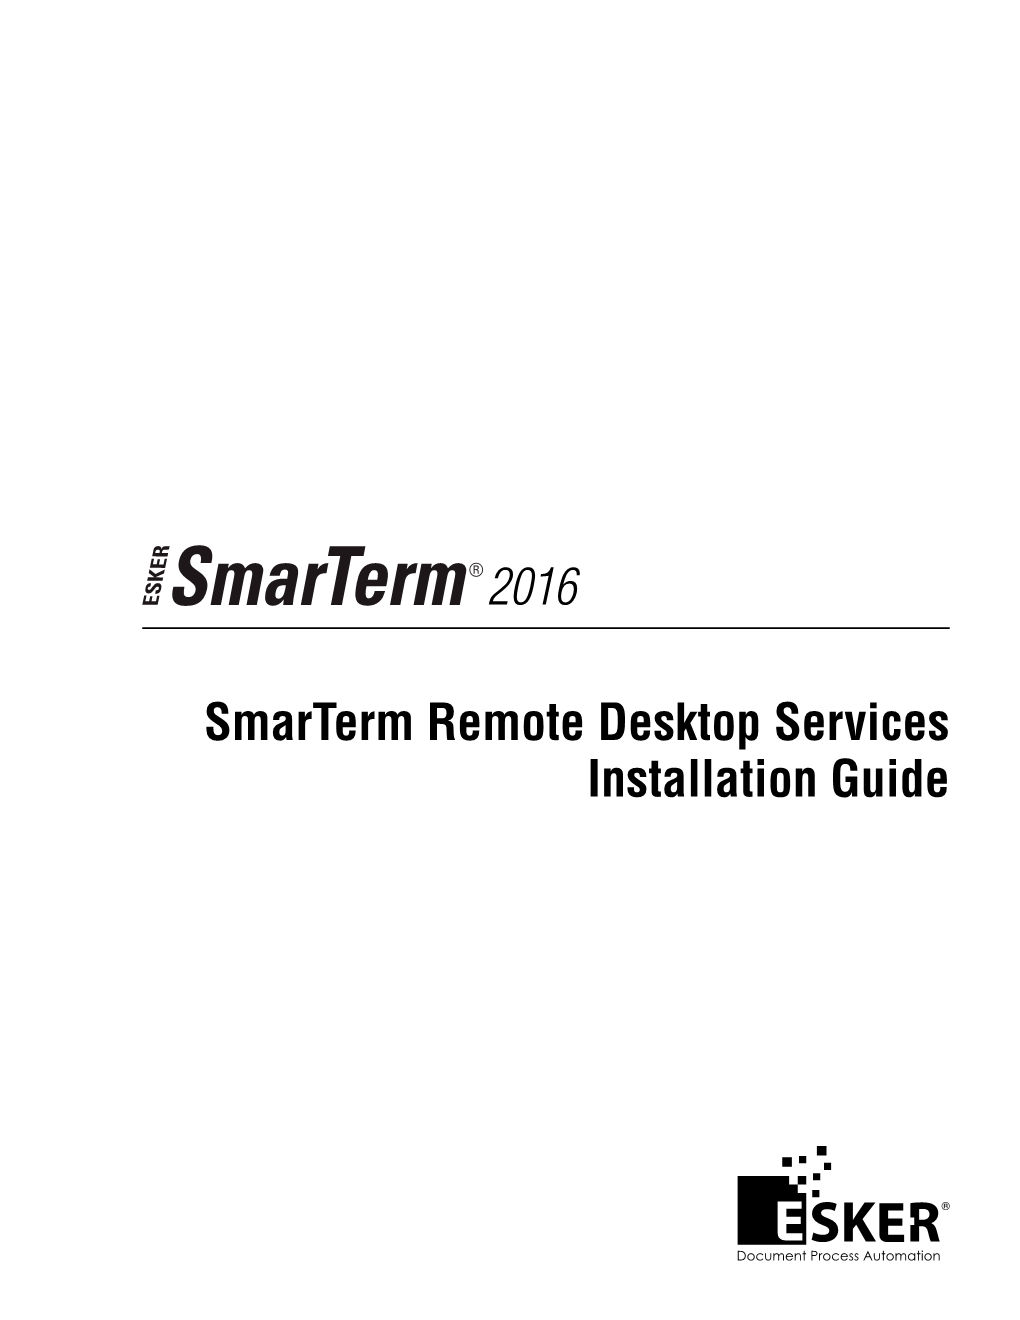 Smarterm Remote Desktop Services Installation Guide Smarterm 2016 - Version 16.0.0 Issued February 2016 Copyright © 1983-2016 Esker S.A